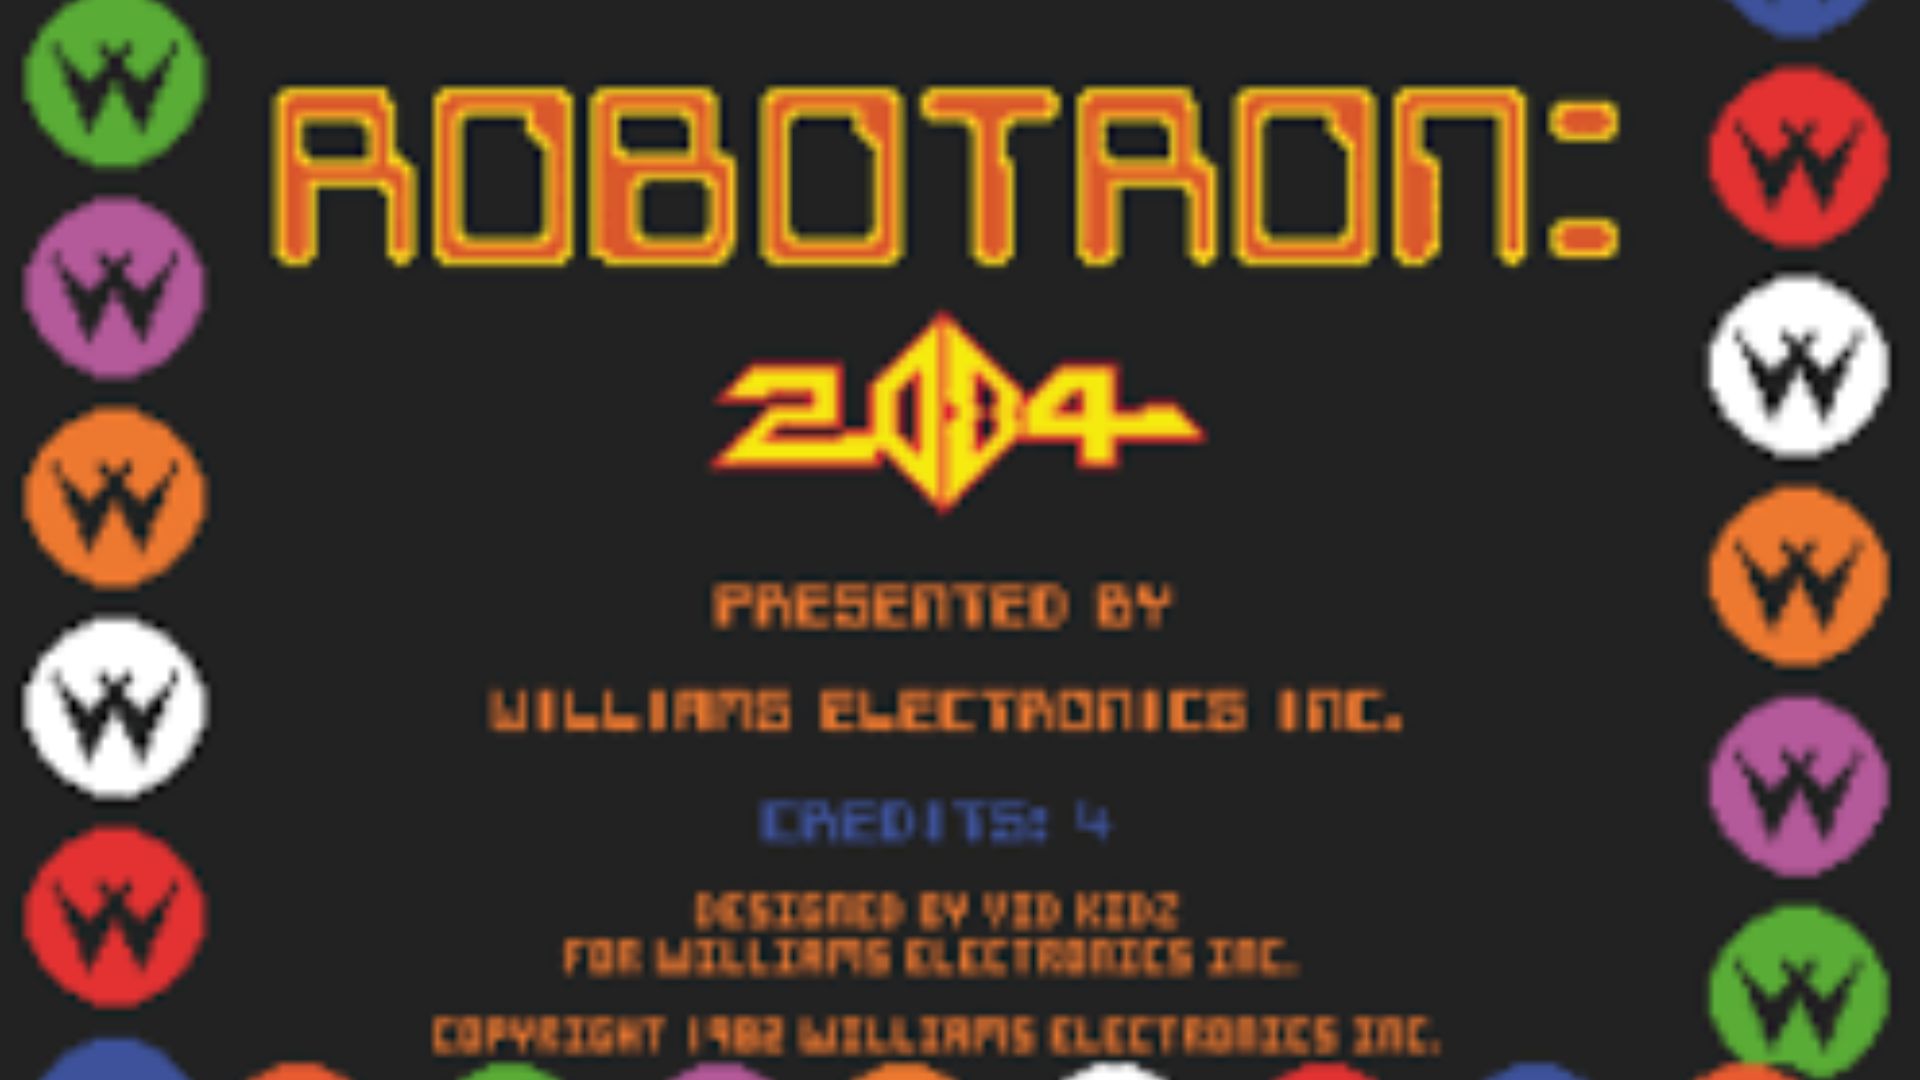 Robatron - Revolutionizing Robotics And Automation